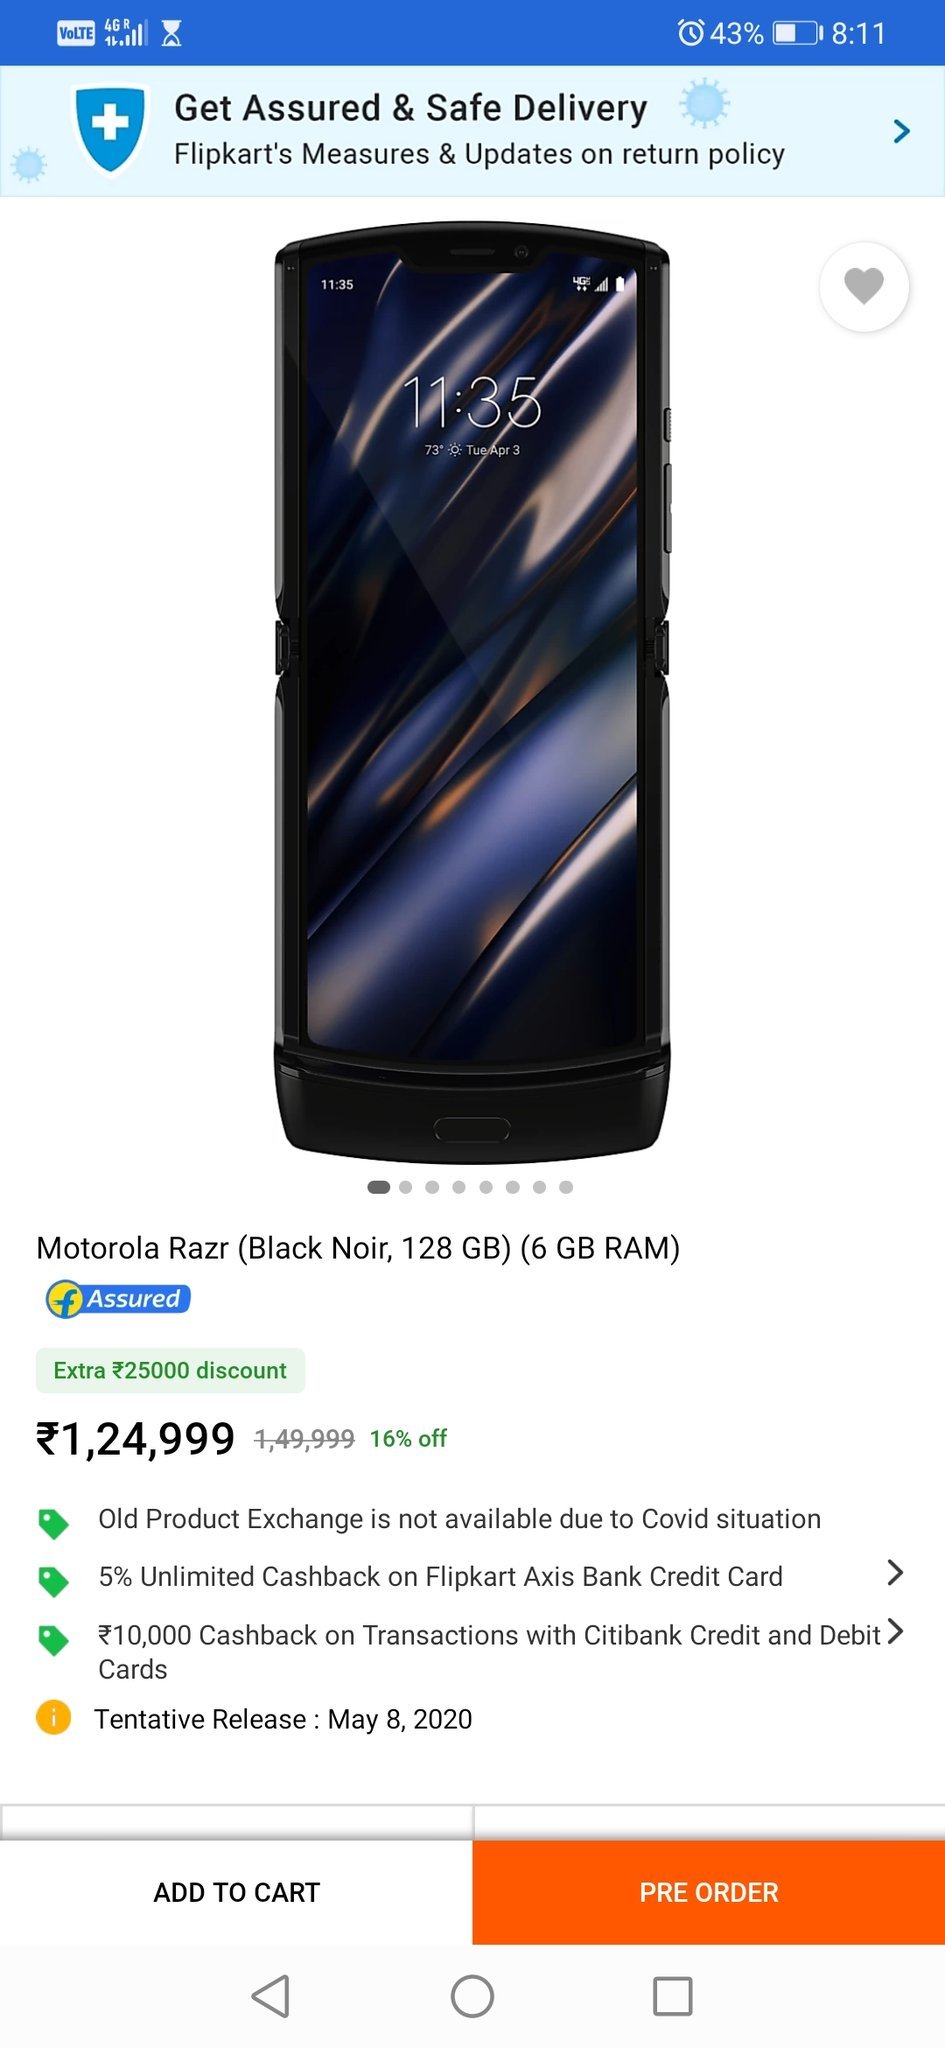 Motorola Razr May 8 tentative release date for India